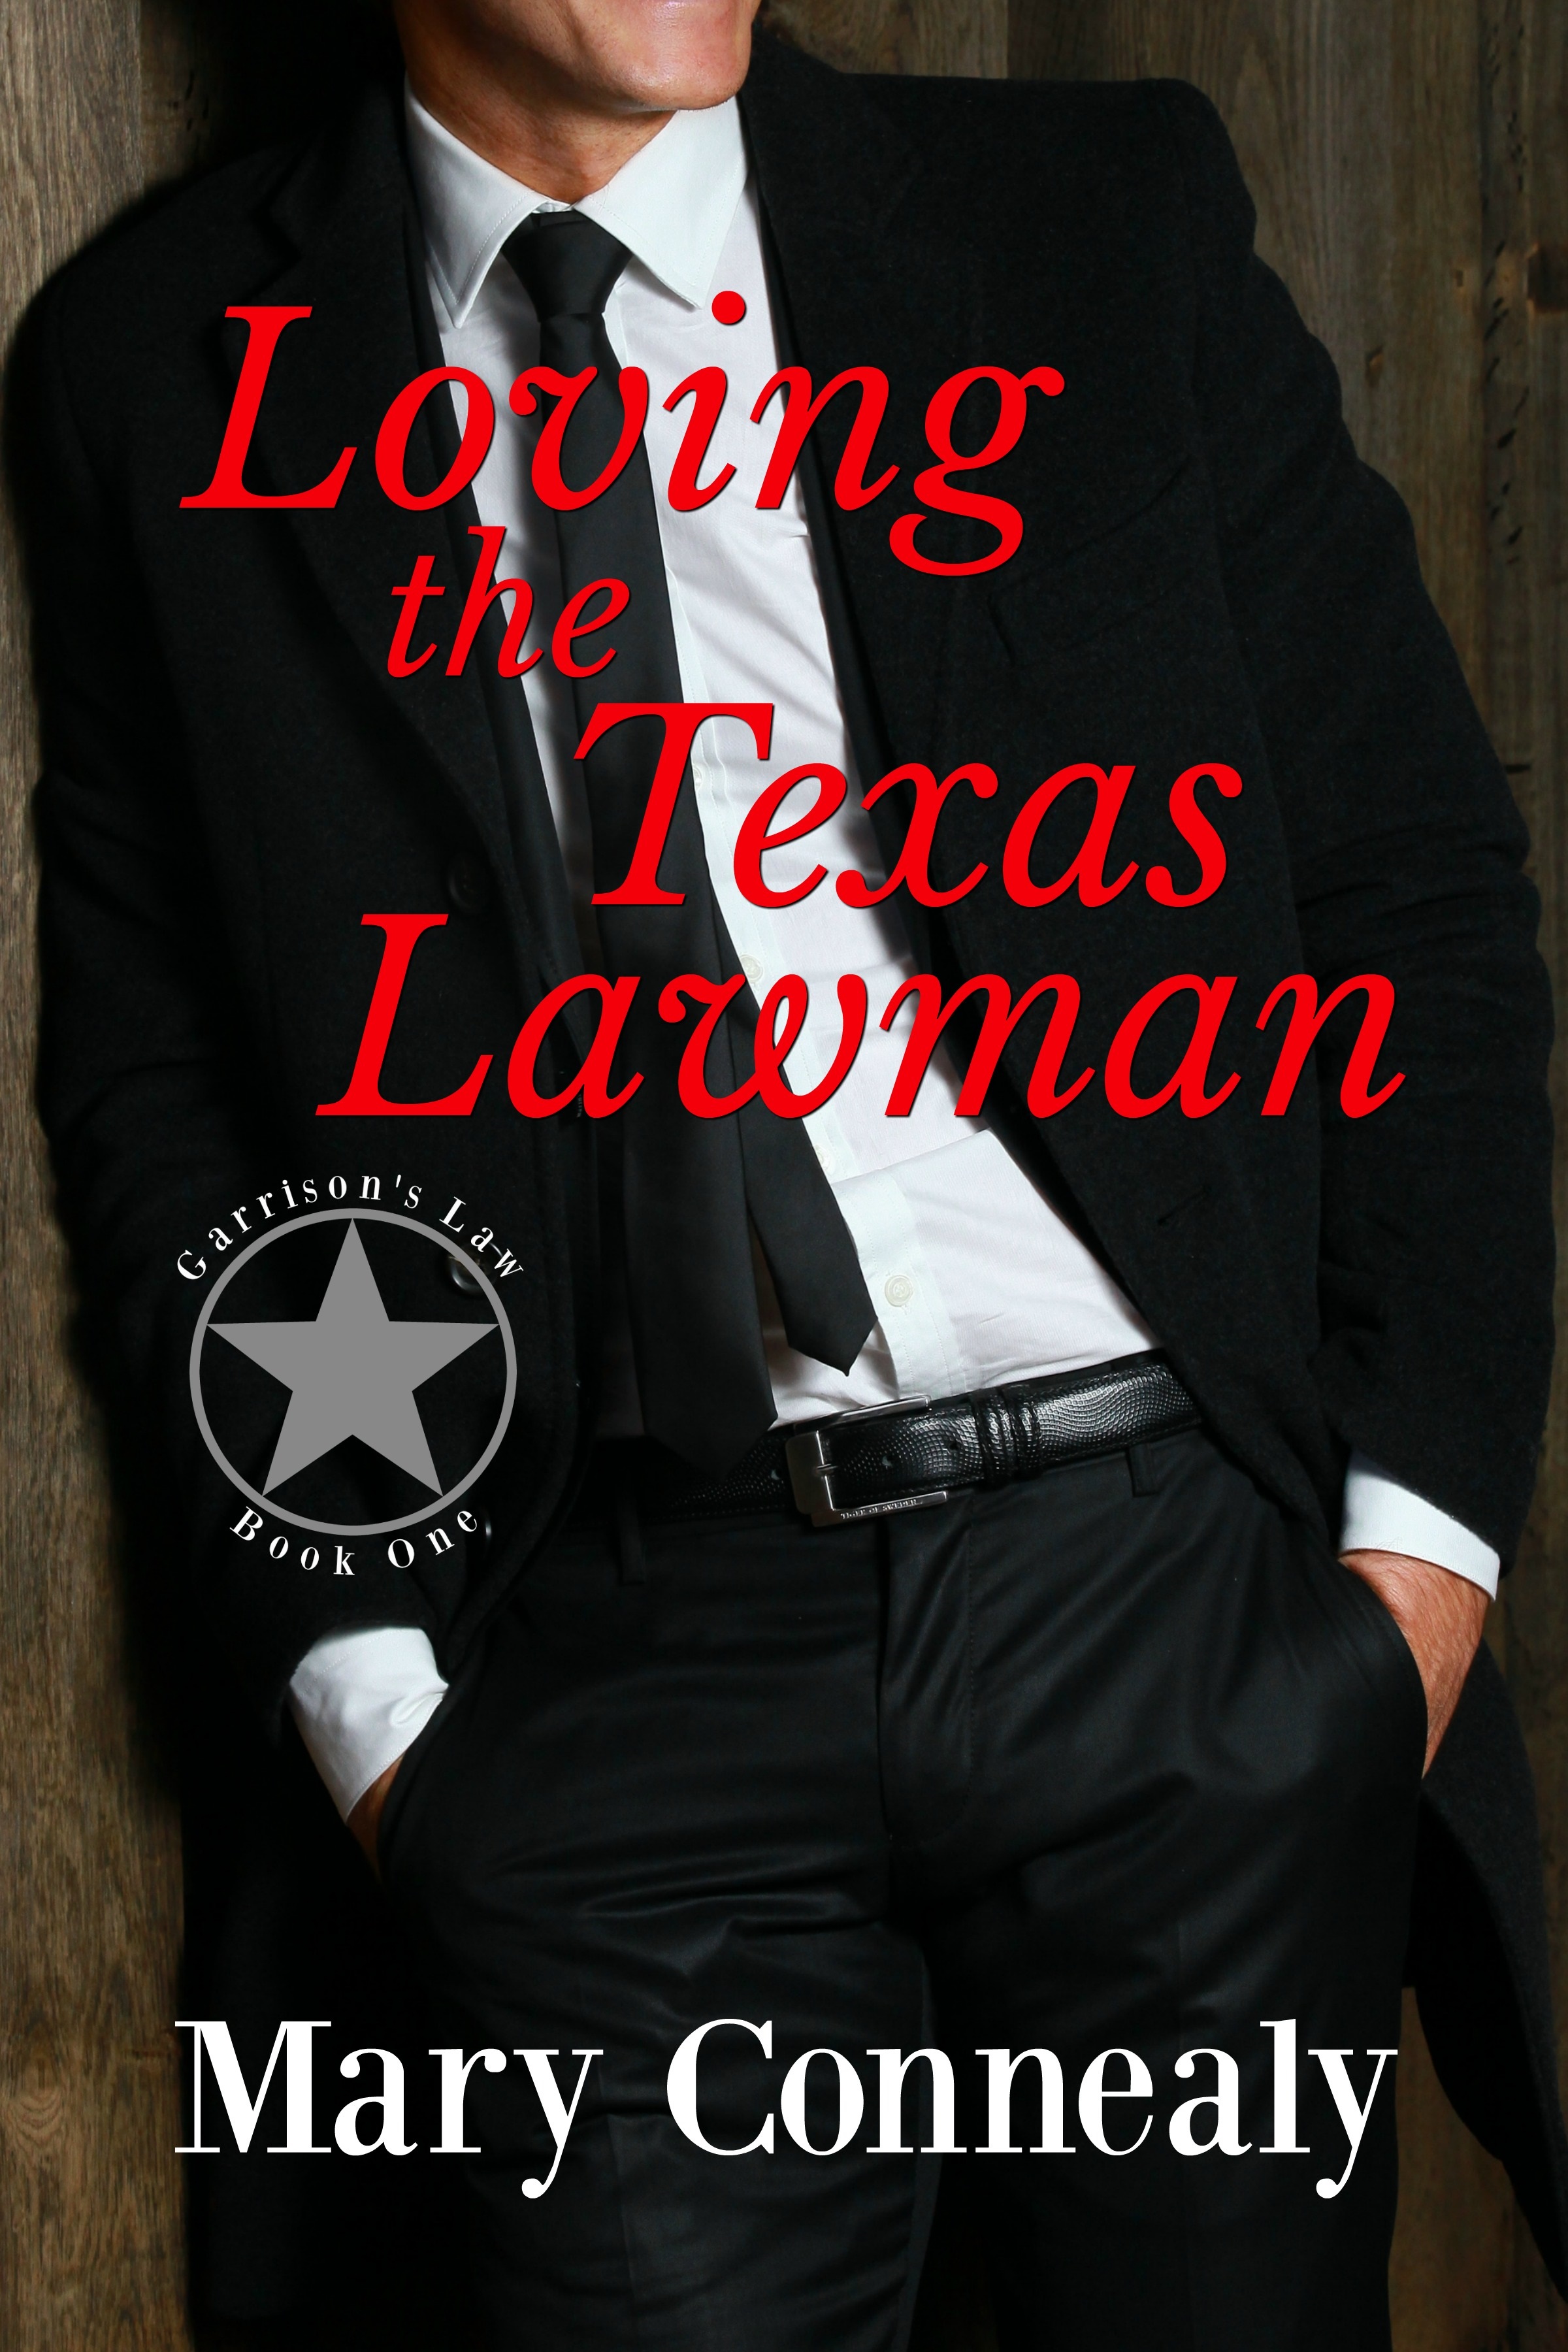 Dressing The Lawman